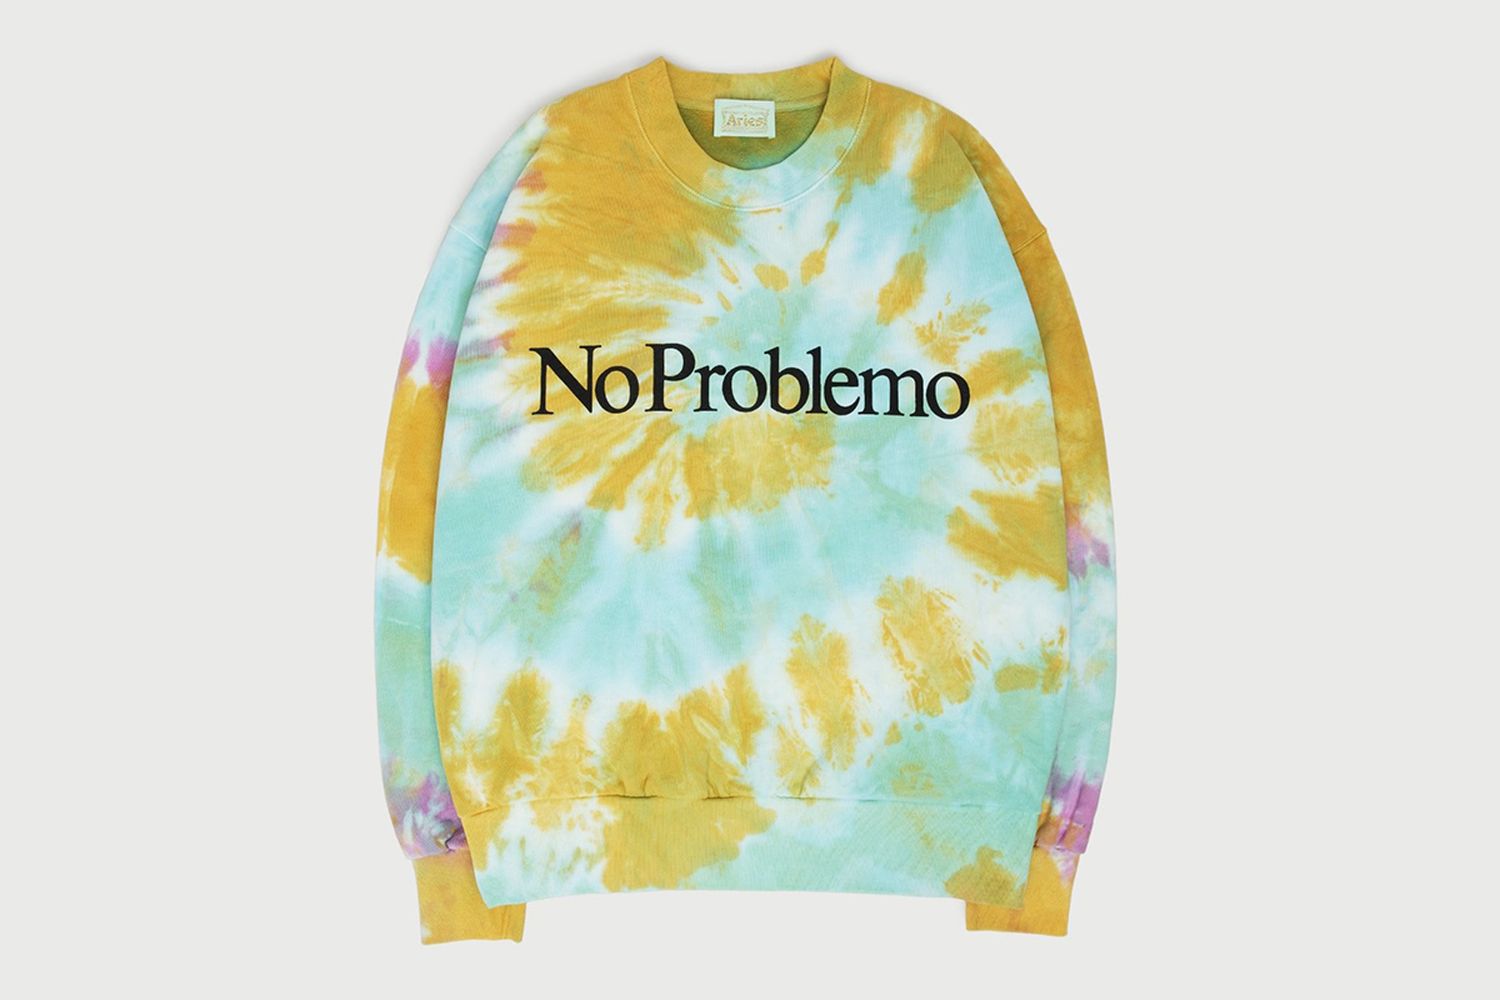 "No Problemo" Tie Dye Sweatshirt